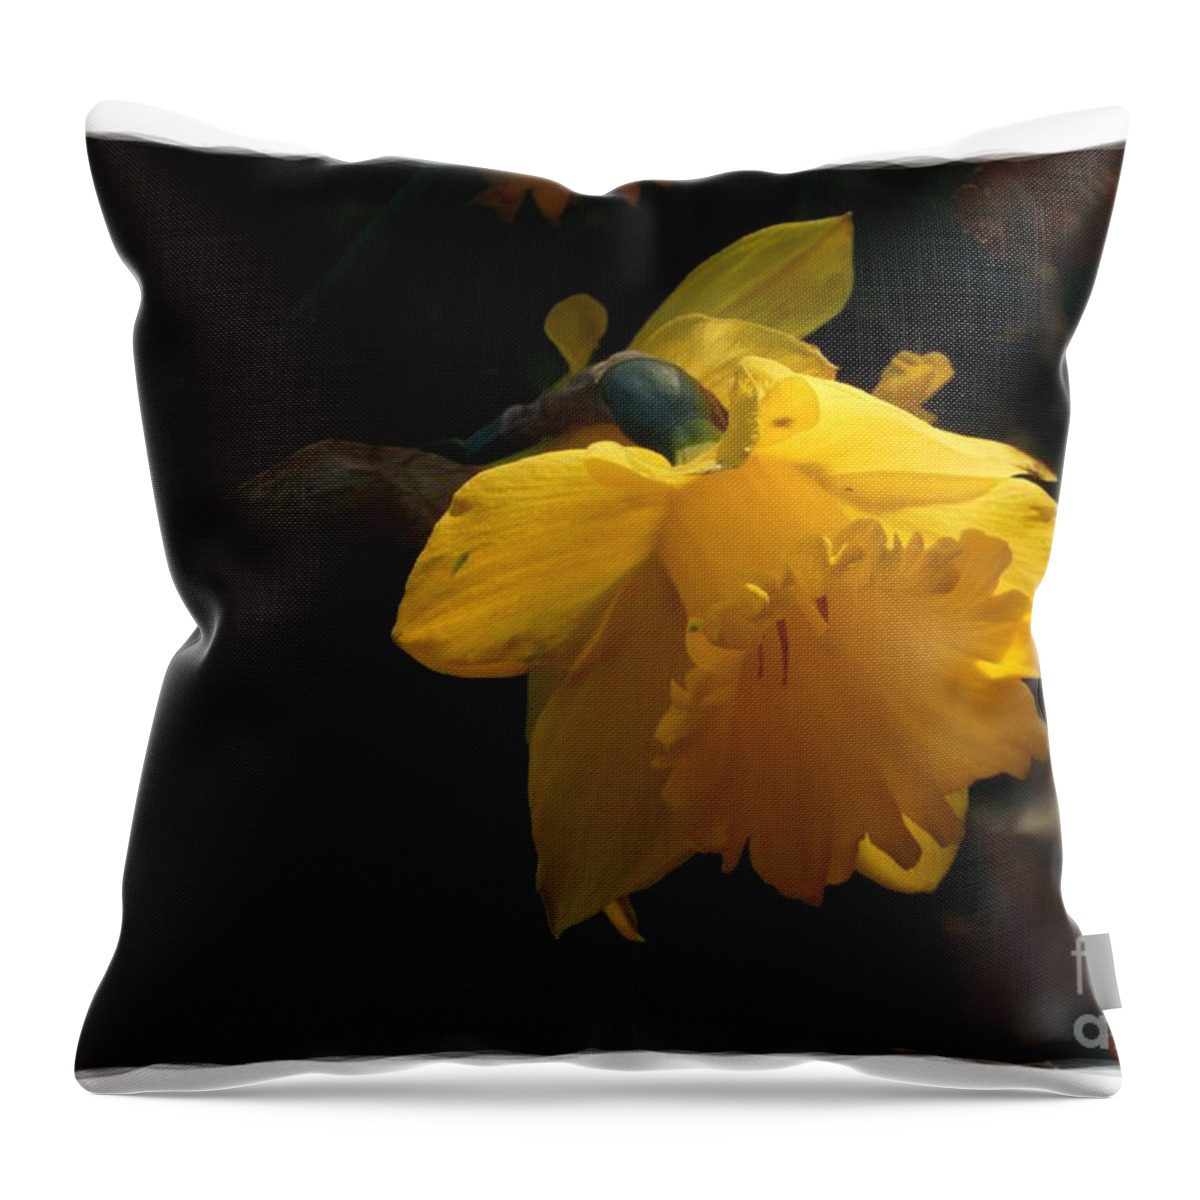 Digital Art Throw Pillow featuring the photograph Yellow Daffodil 6 by Jean Bernard Roussilhe